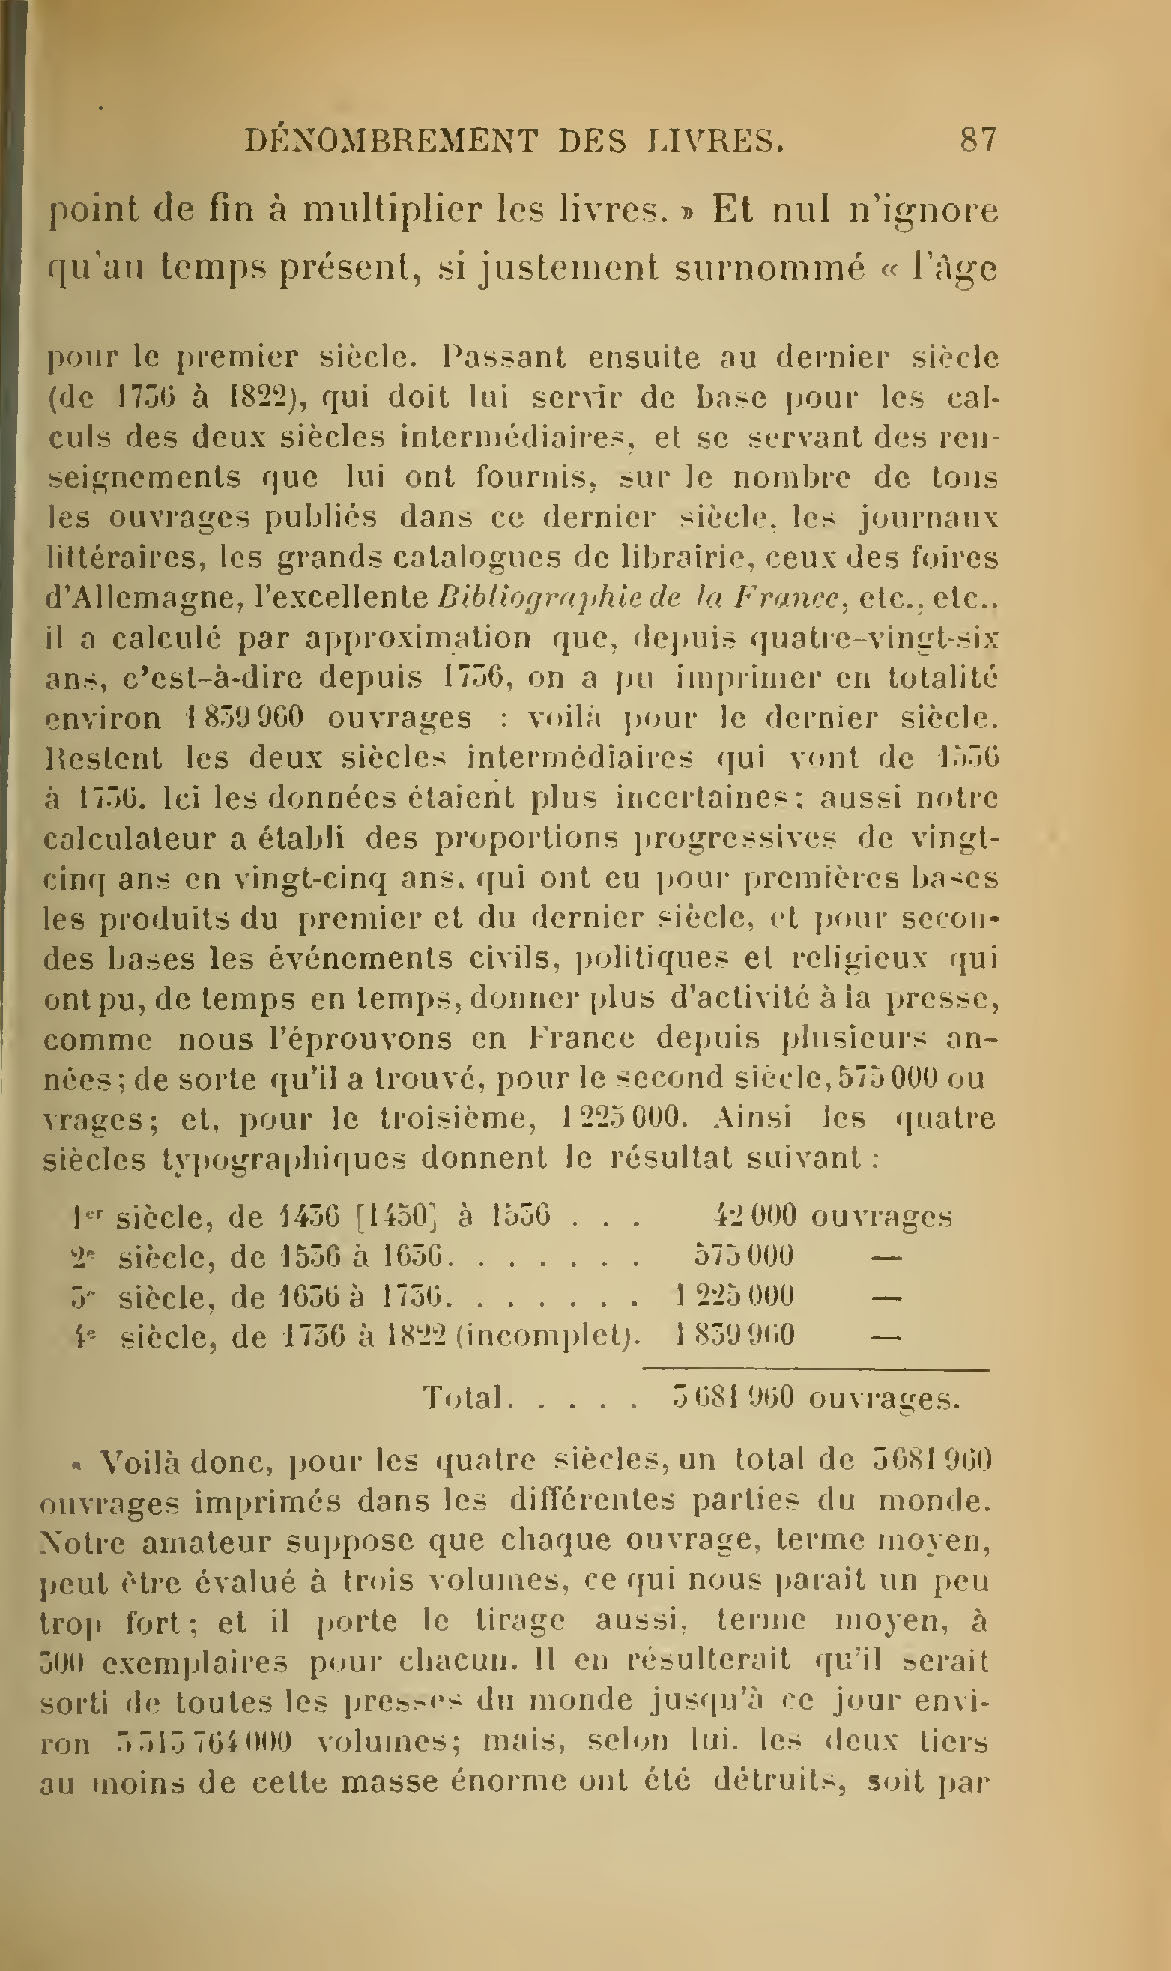 Albert Cim, Le Livre, t. II, p. 087.